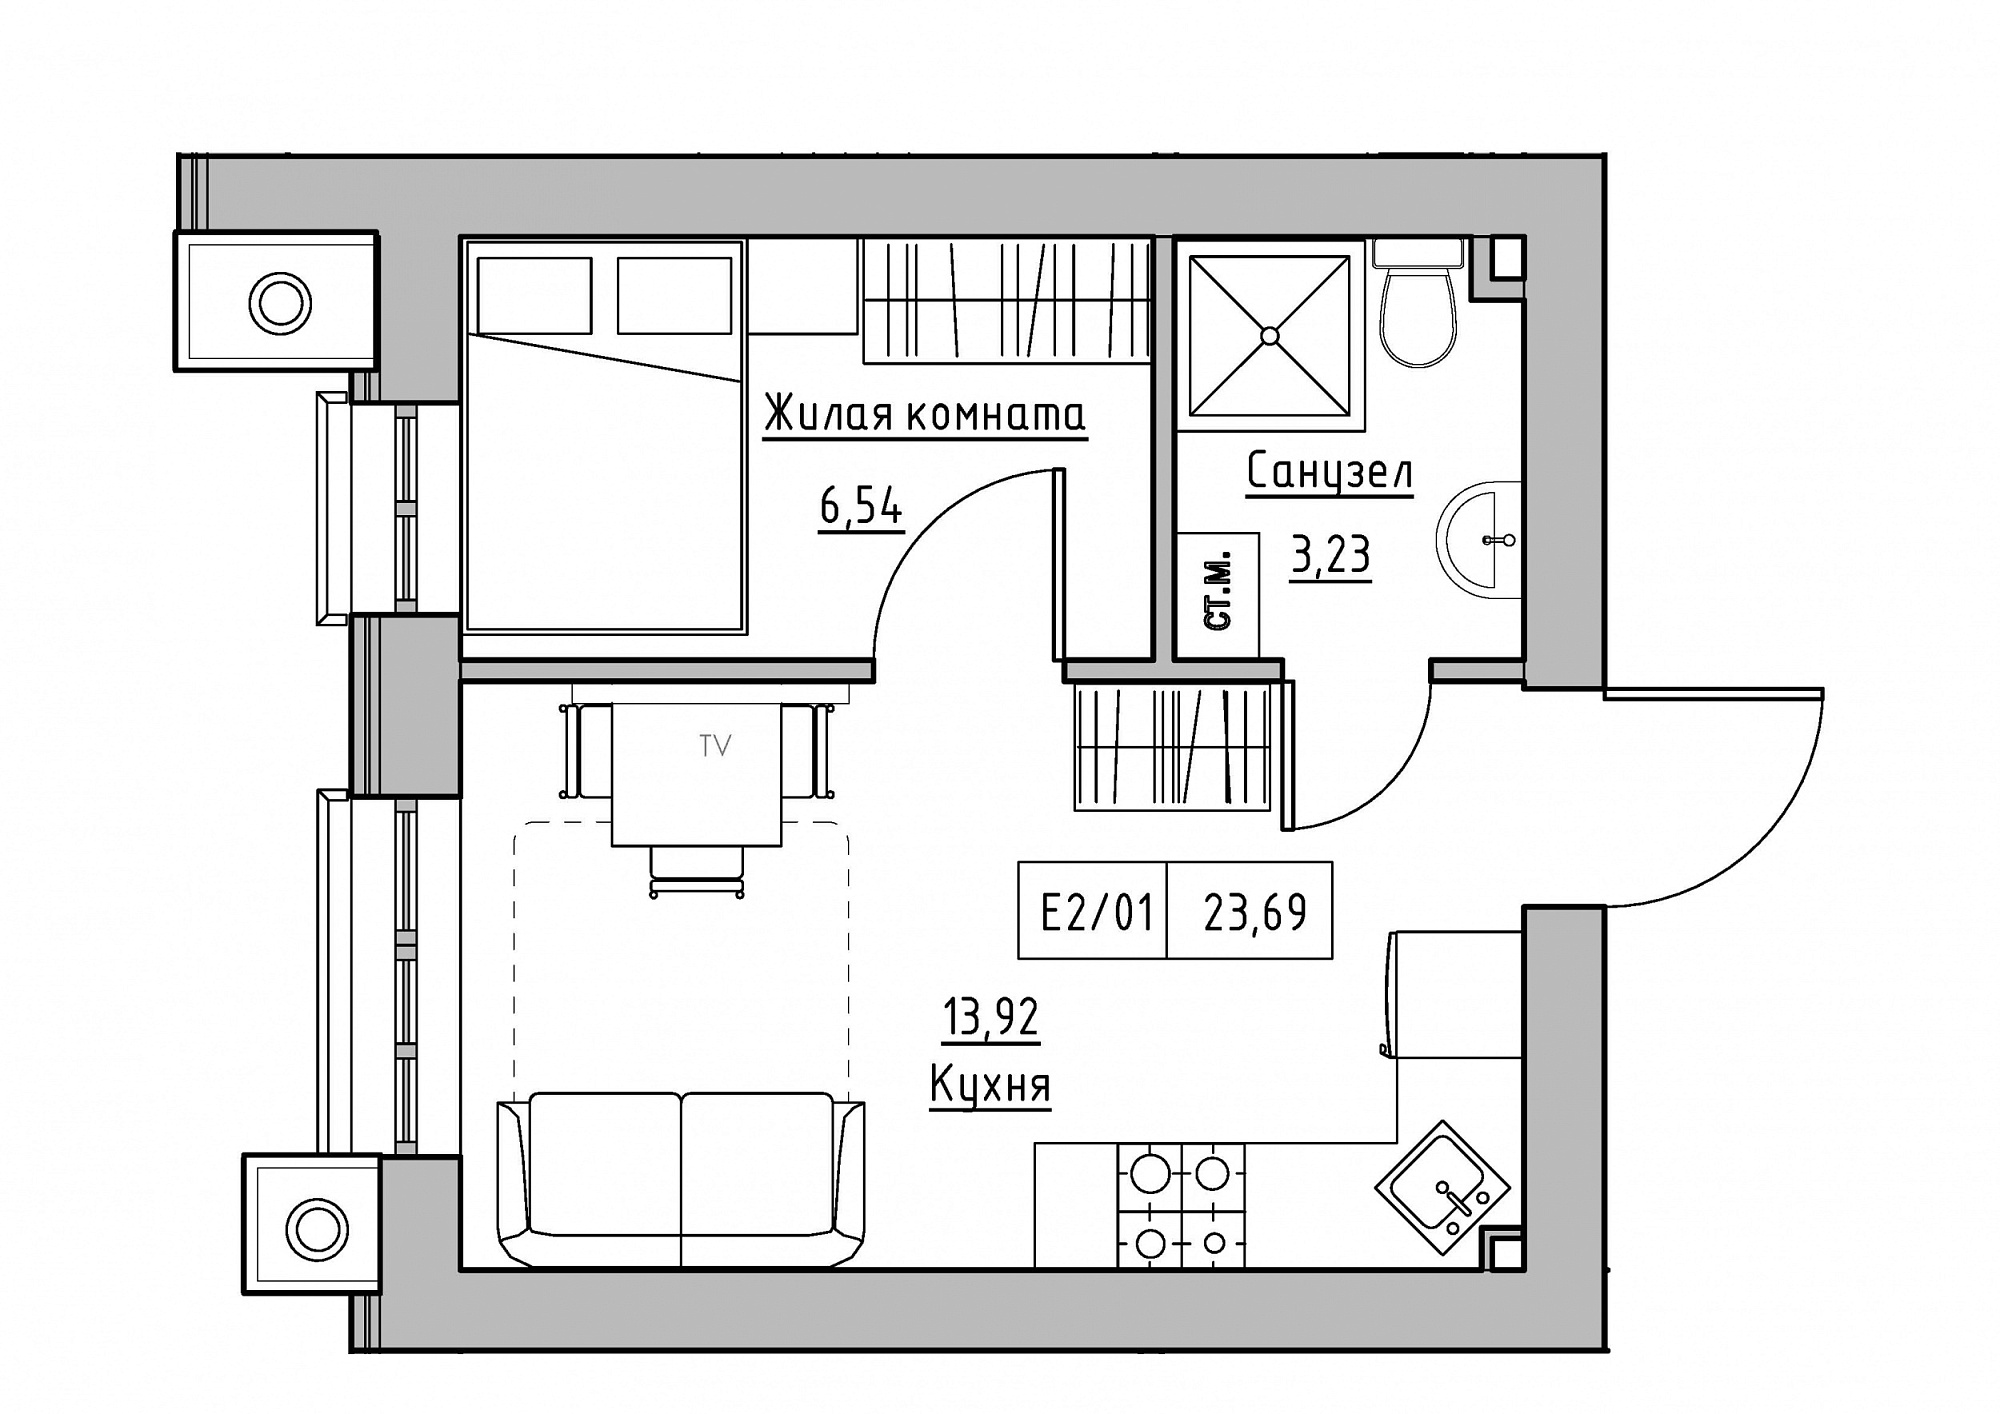 Planning 1-rm flats area 23.69m2, KS-012-01/0009.